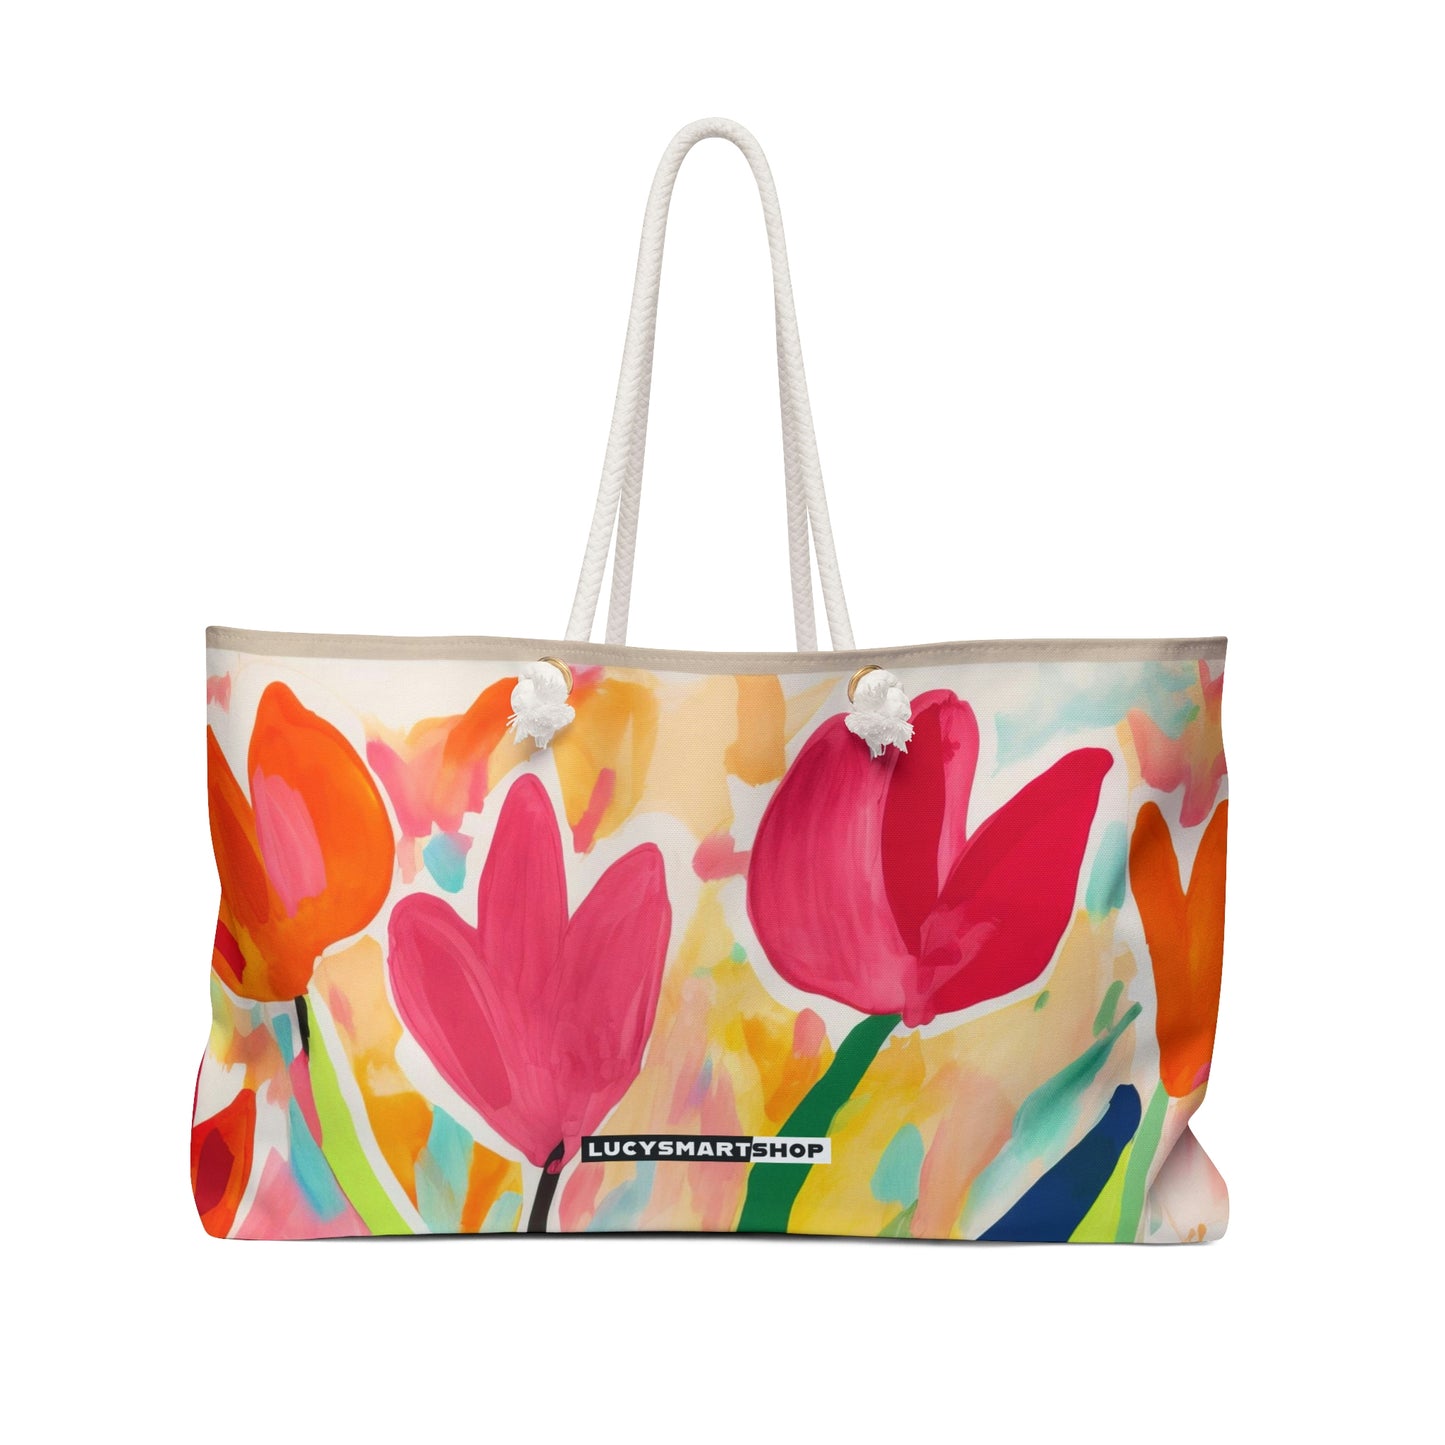 Tulips flower Tote Bag - Large capacity totte bag | Tulip Tote bag style #20230502